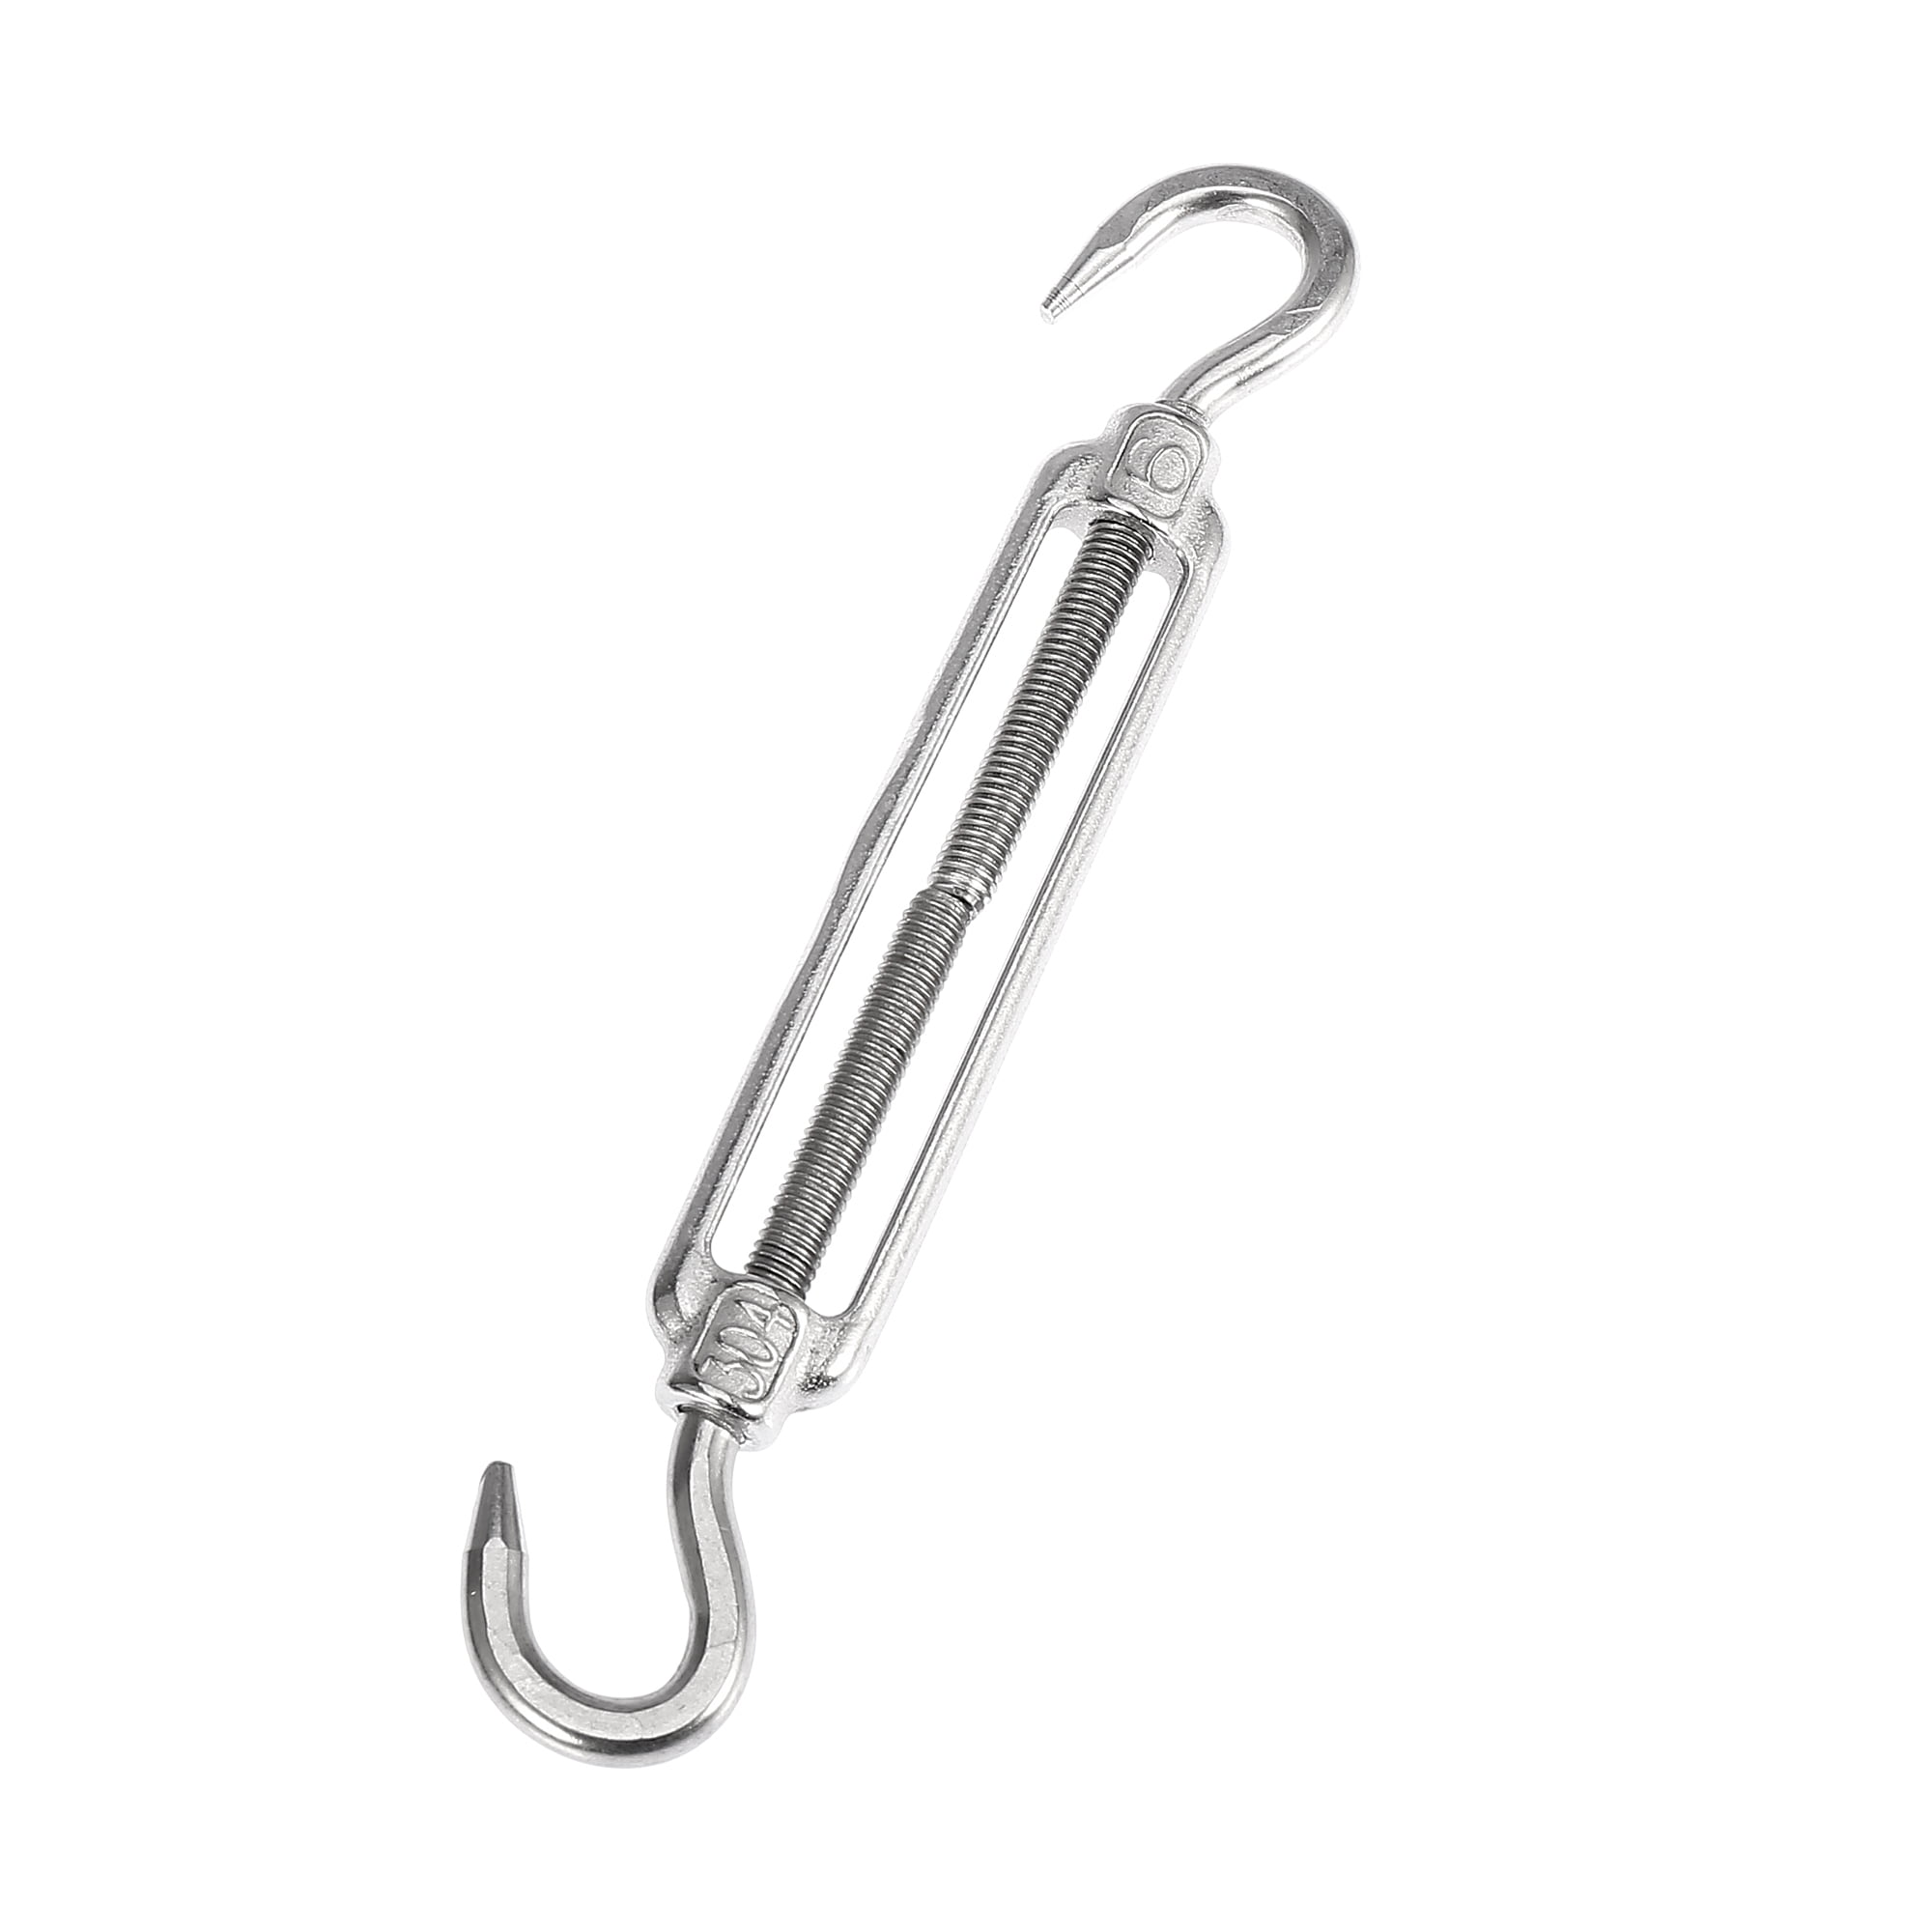 M6 Stainless Steel 304 Hook /& Hook Turnbuckle Wire Rope Tension Pack of 8